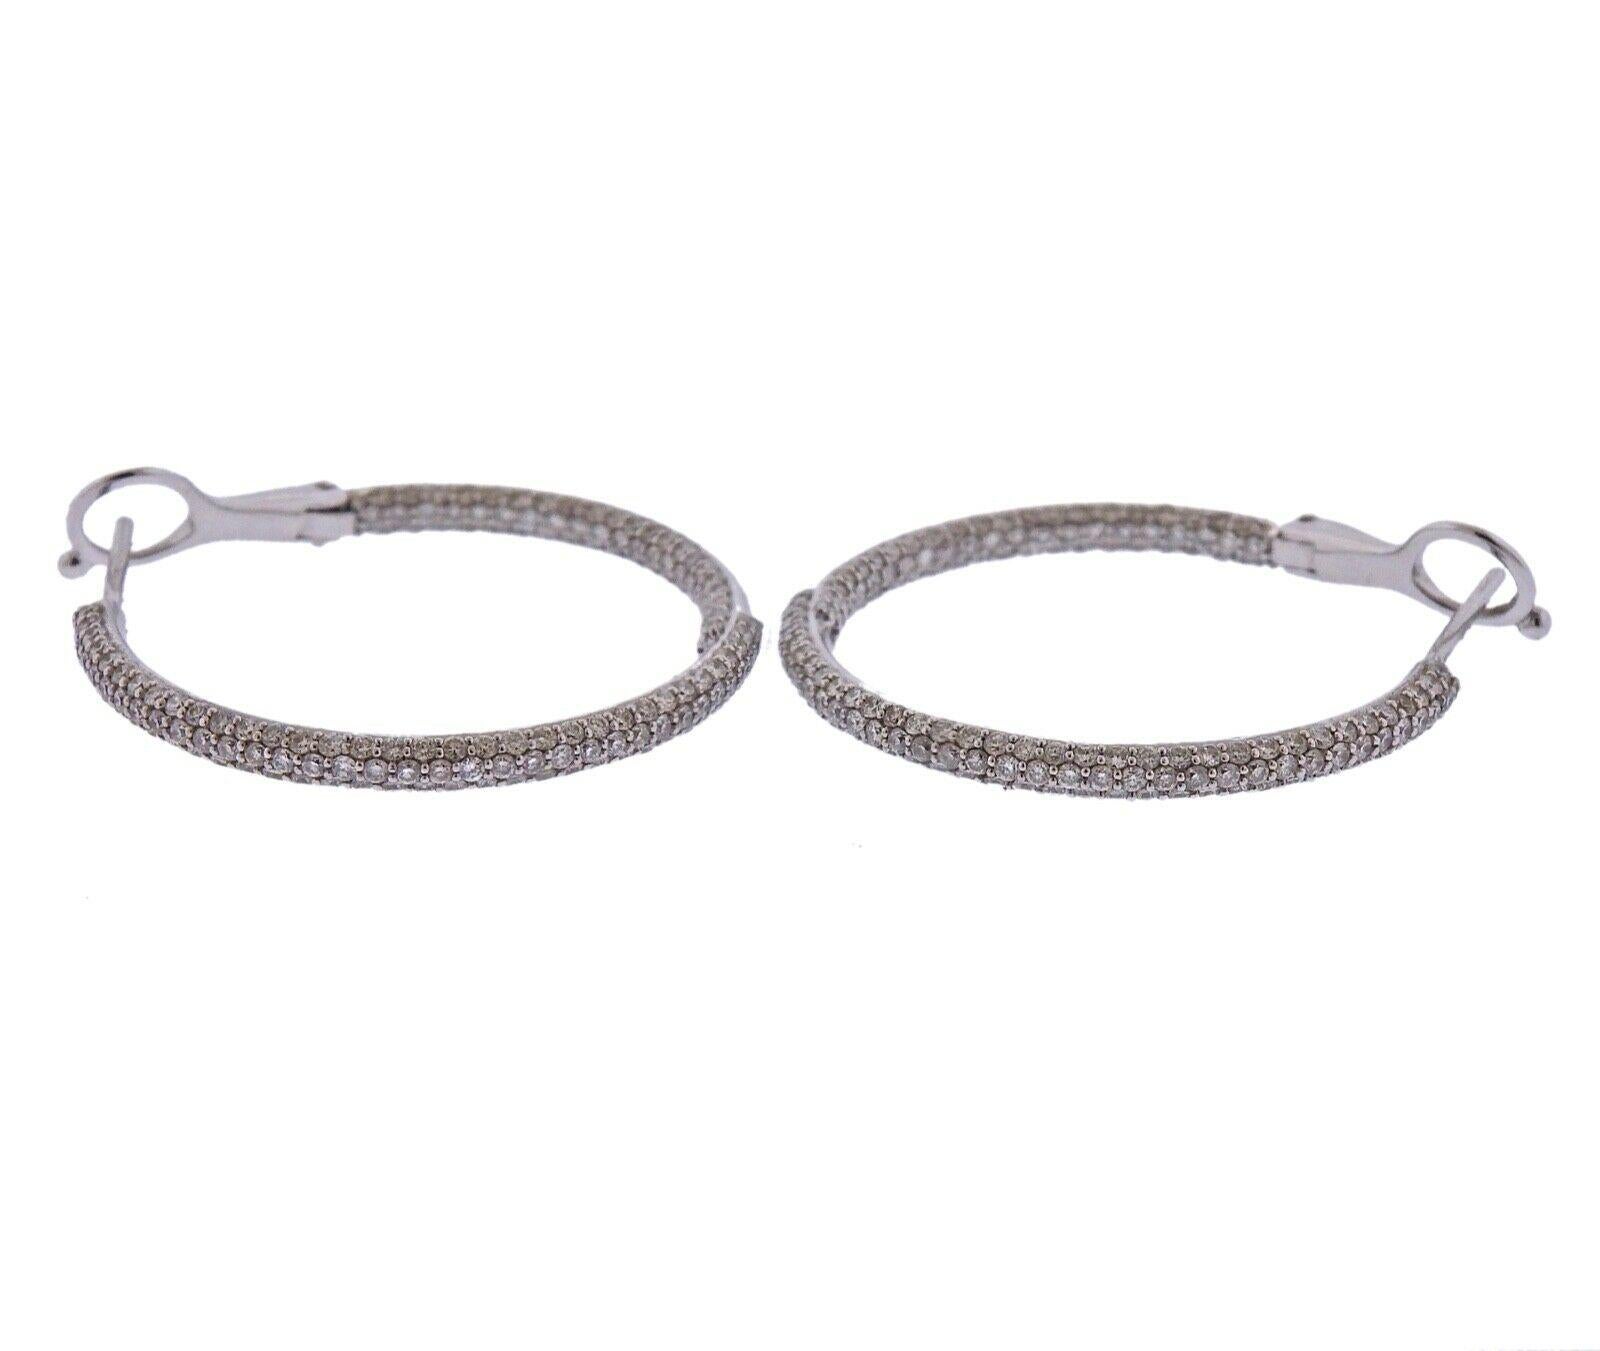 Pair of 14k white gold hoop earrings, with approx. 1.80ctw in H/Si diamonds.  Earrings measure 29mm in diameter, 2mm wide, weight - 6.9 grams. 